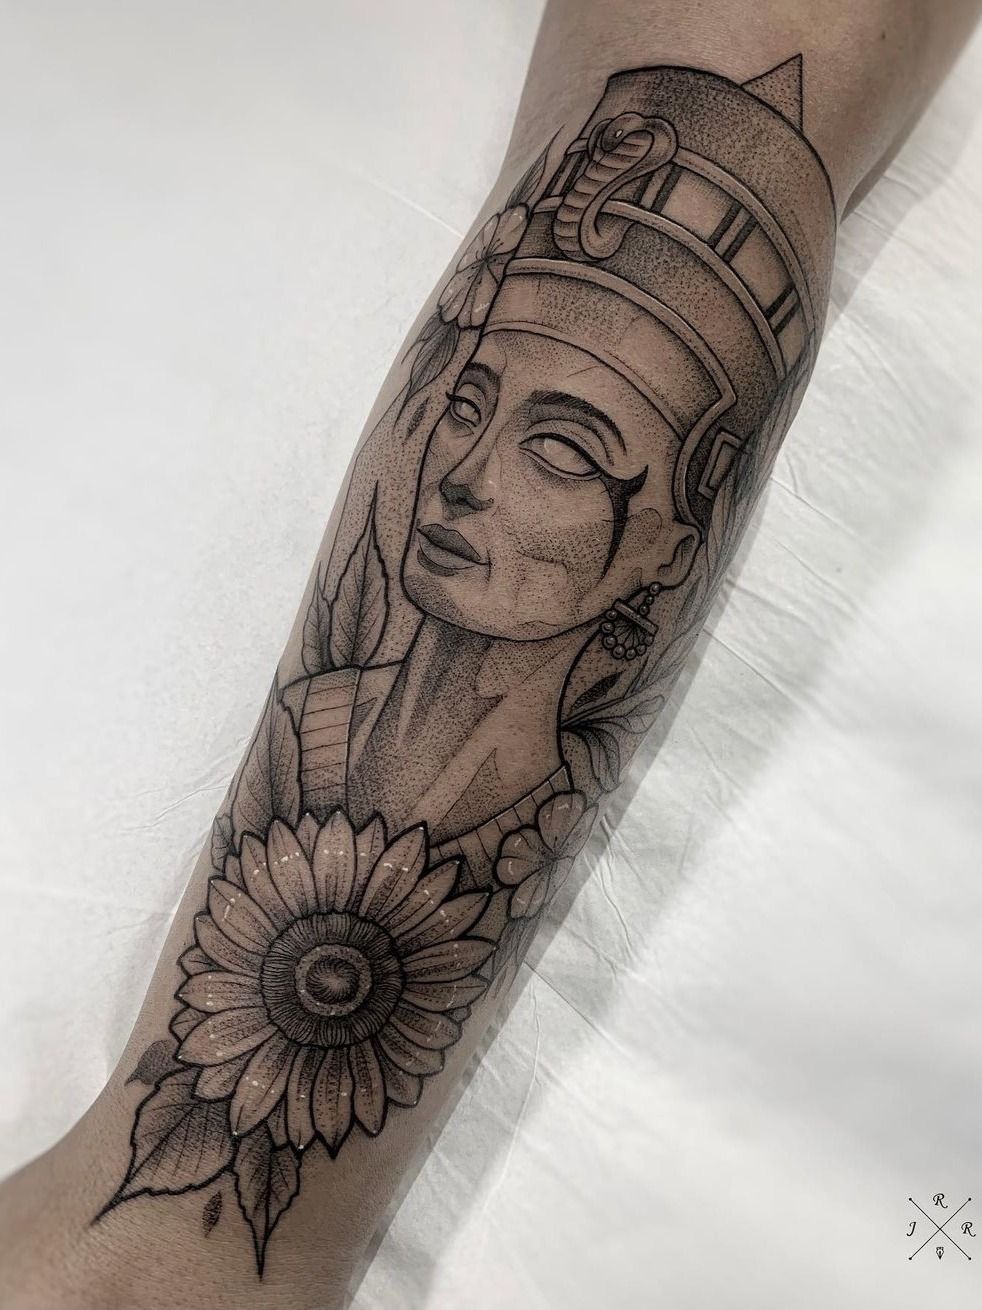 Anubis Tattoos: Meanings, Tattoo Designs & Ideas